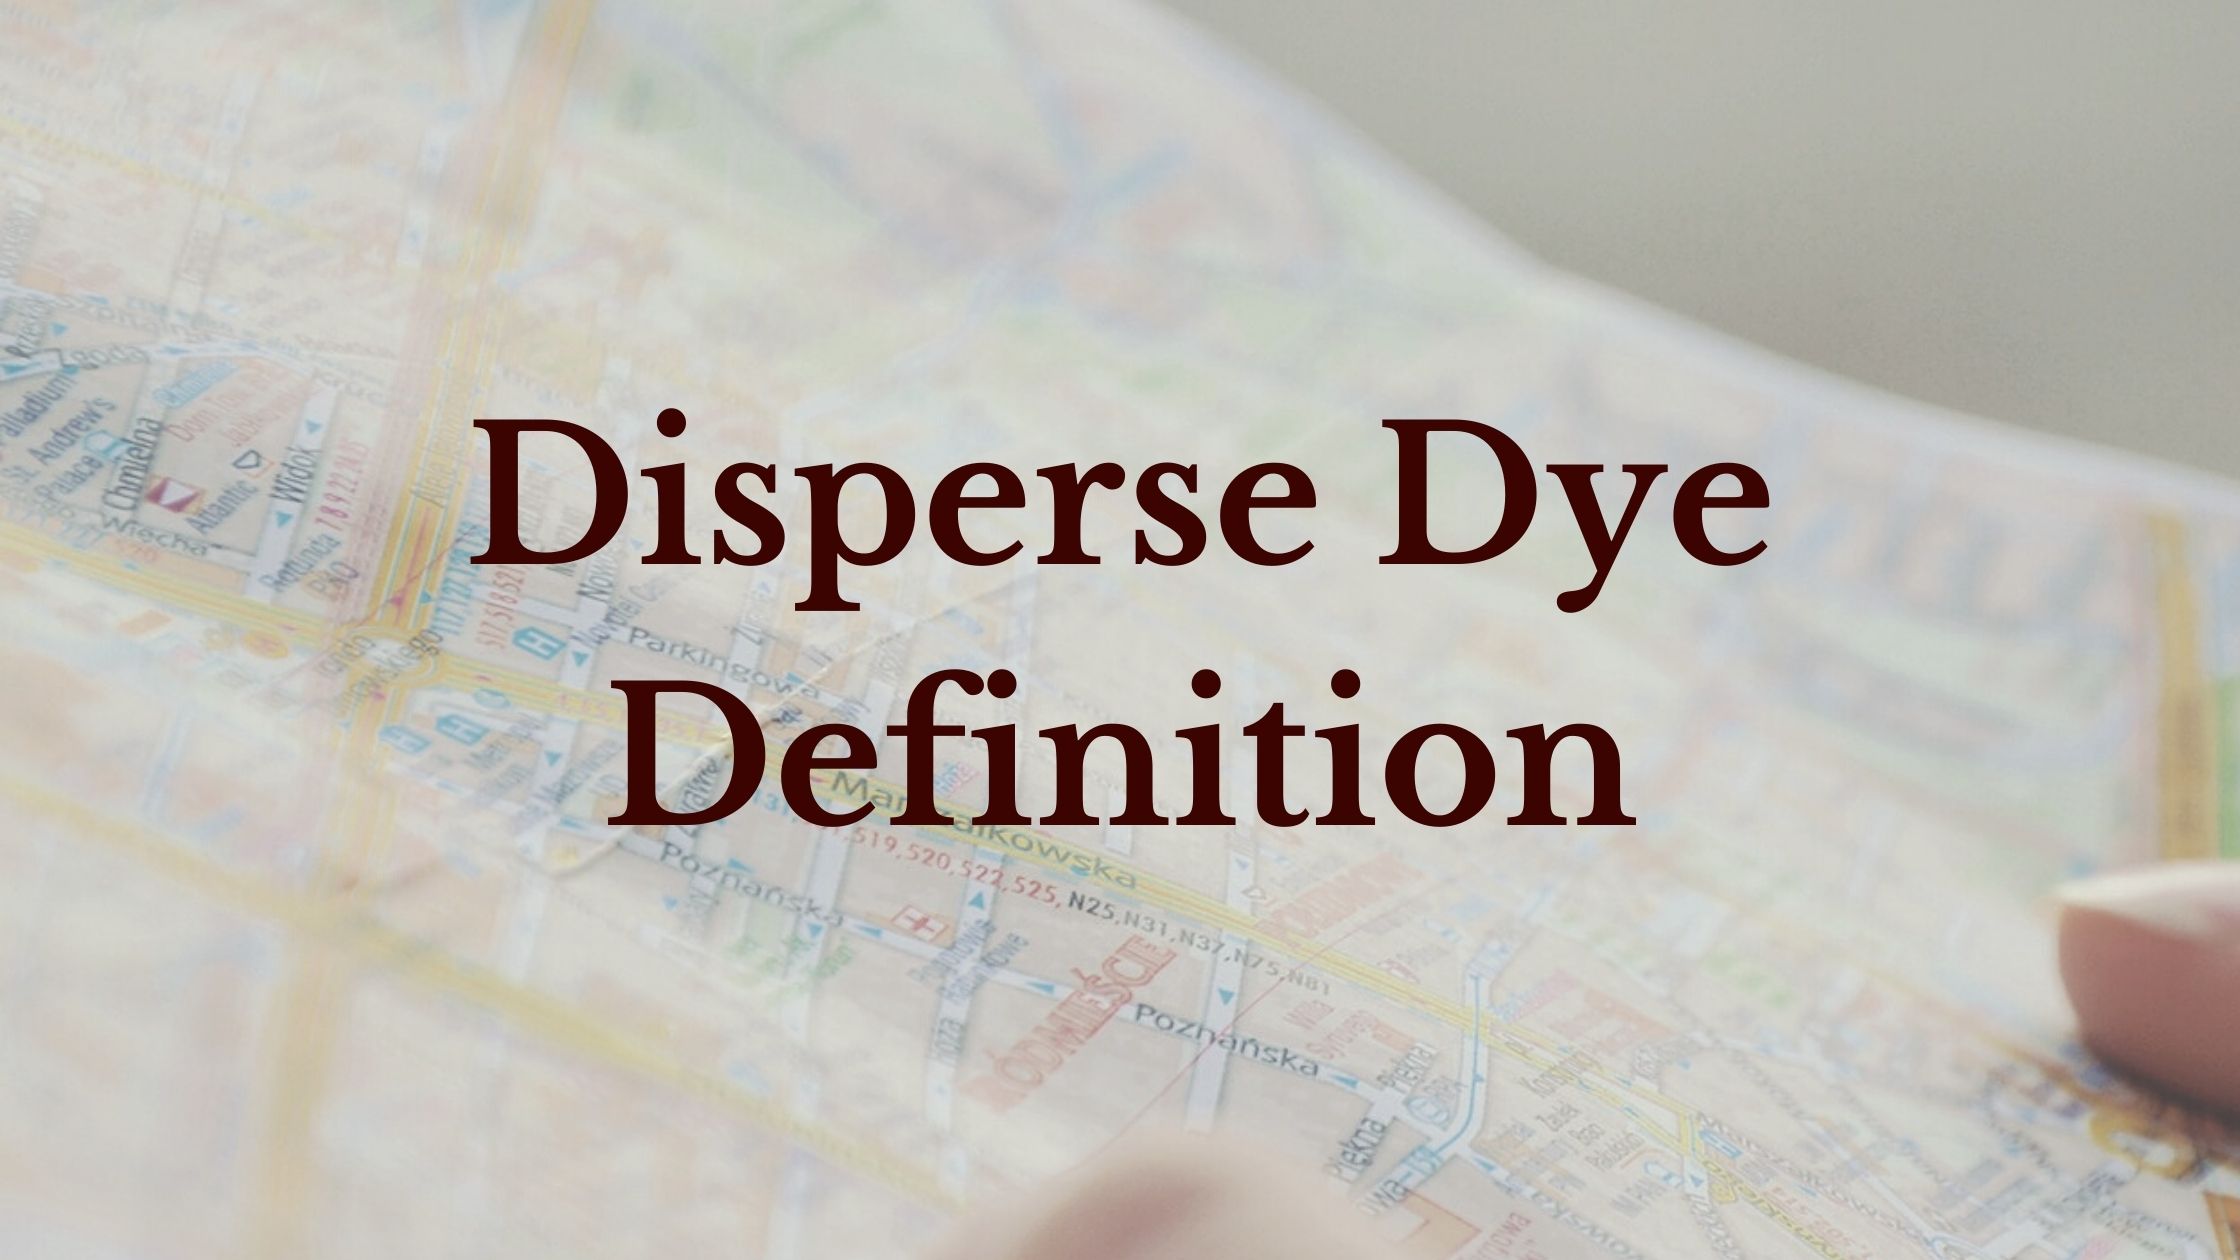 Disperse dye definition